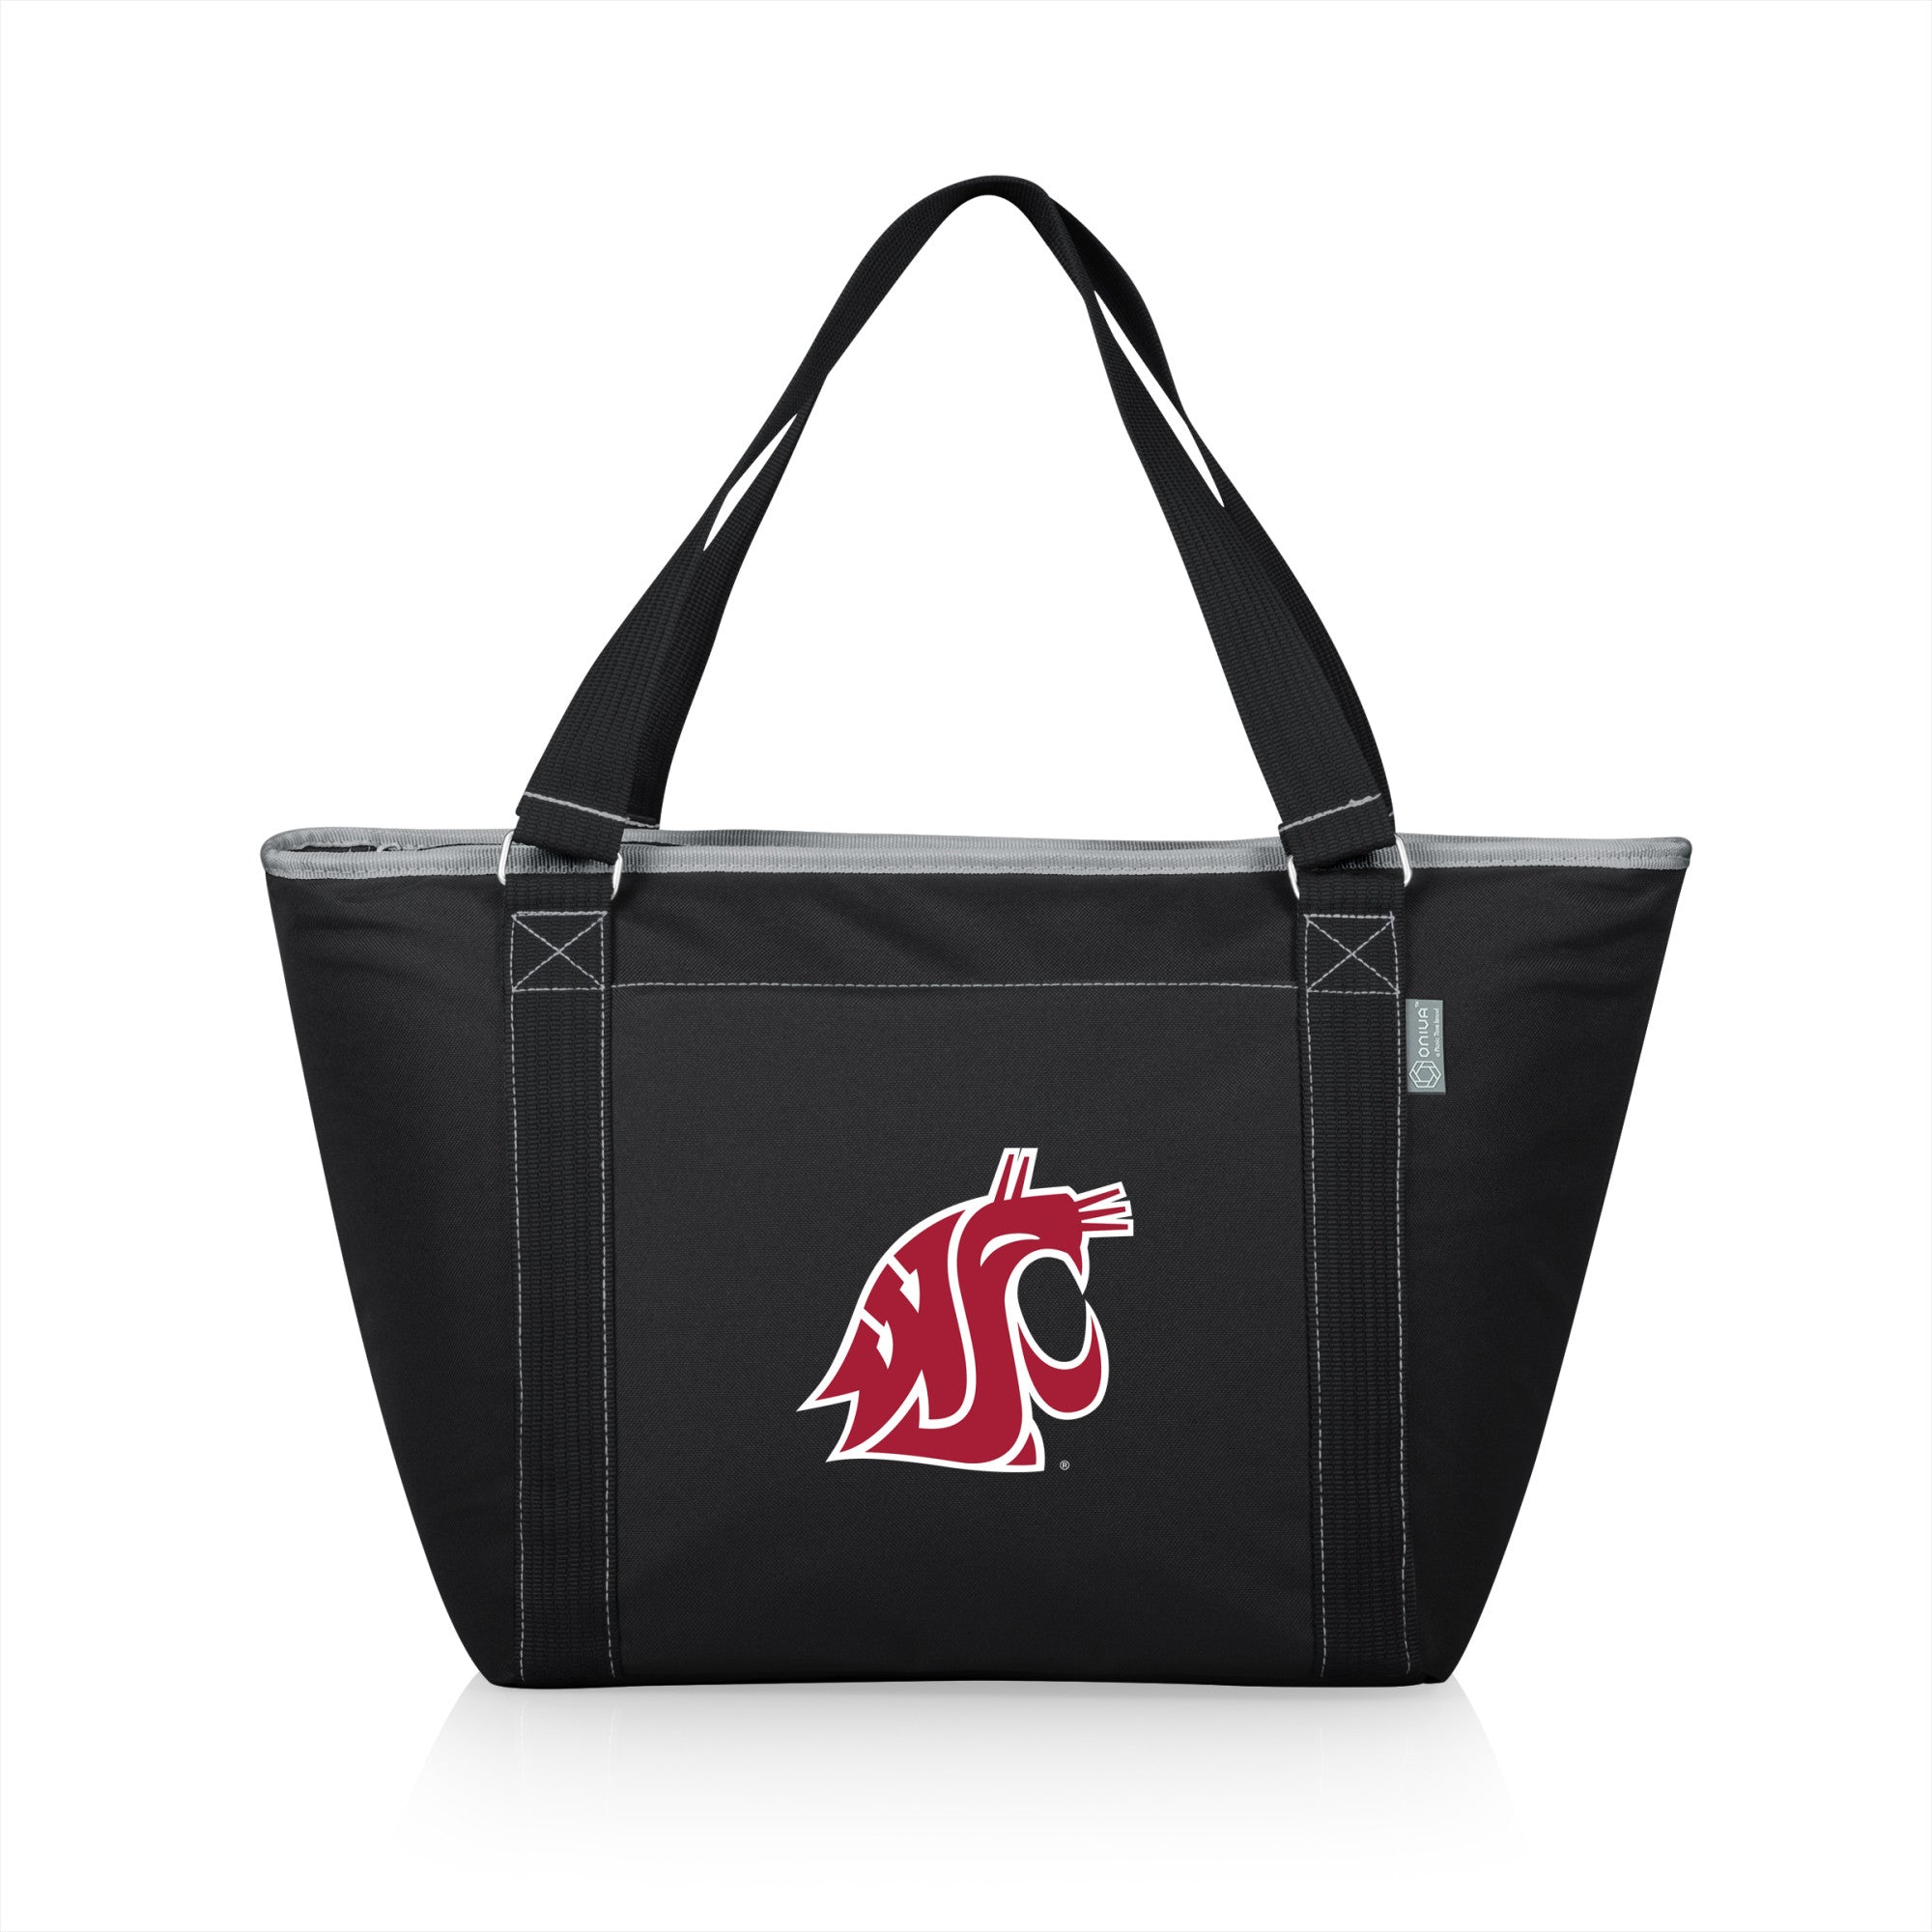 Washington State Cougars - Topanga Cooler Tote Bag